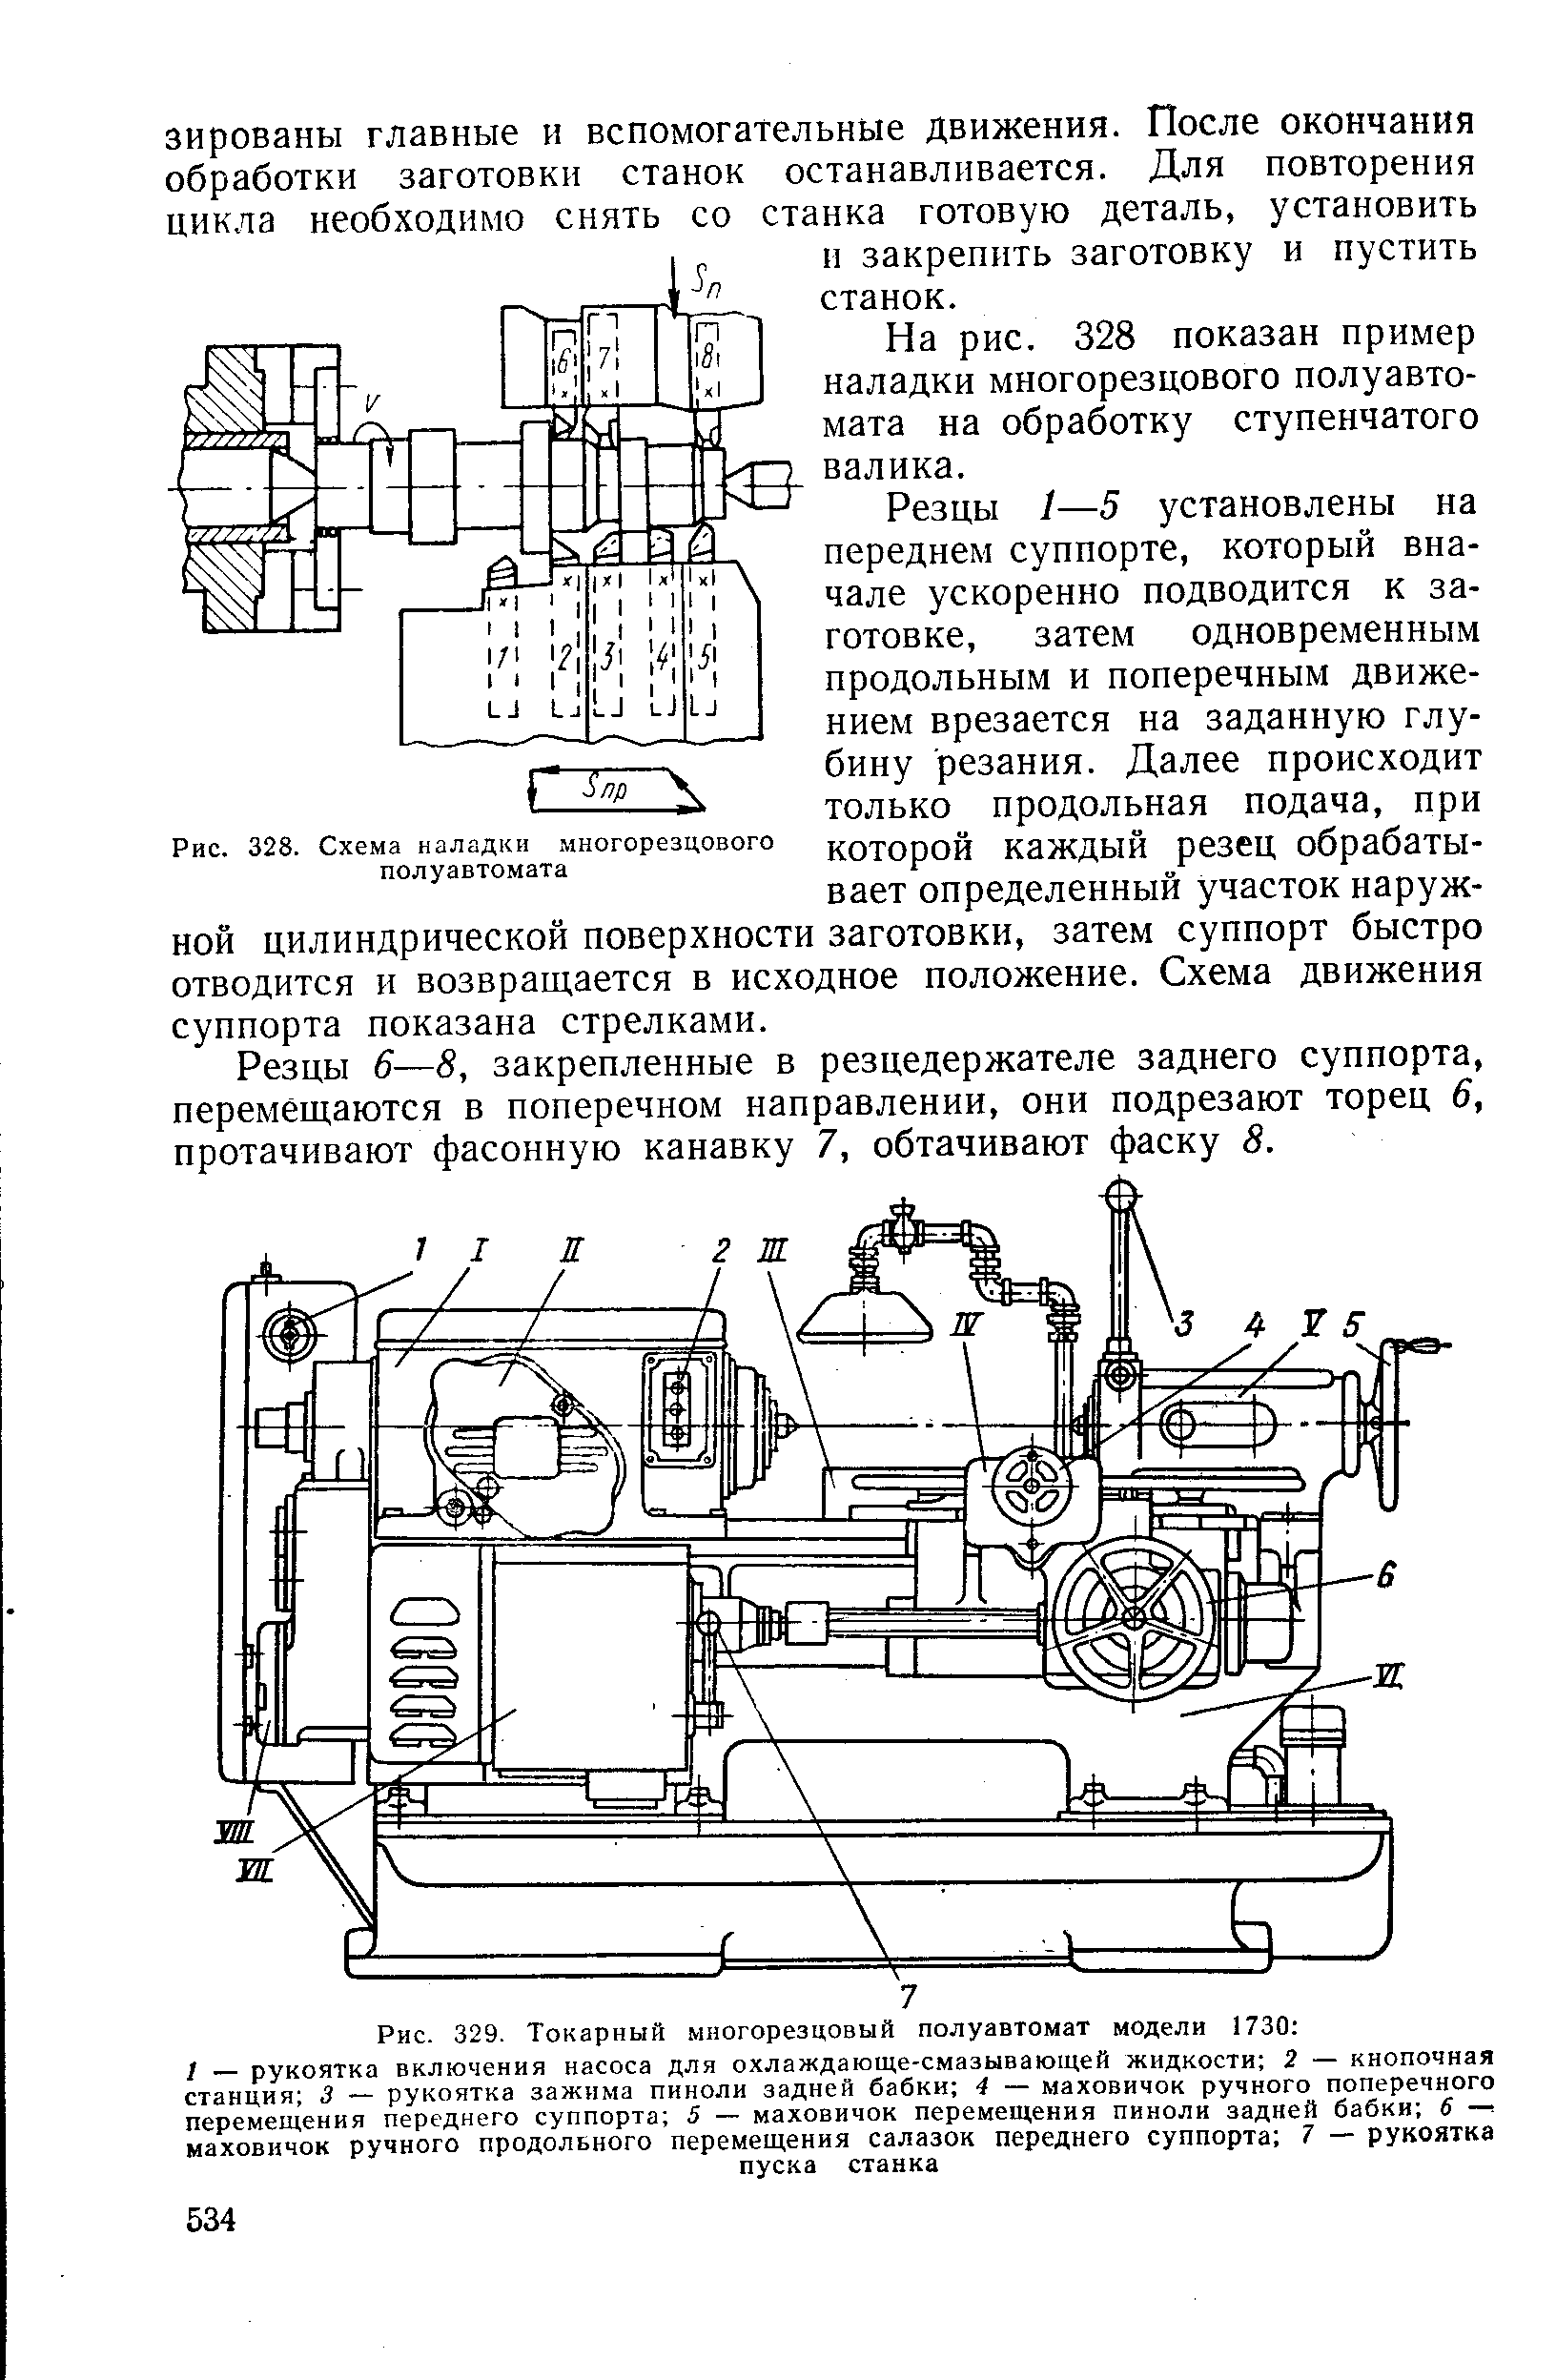 Рис. 328. Схема наладки многорезцового полуавтомата
